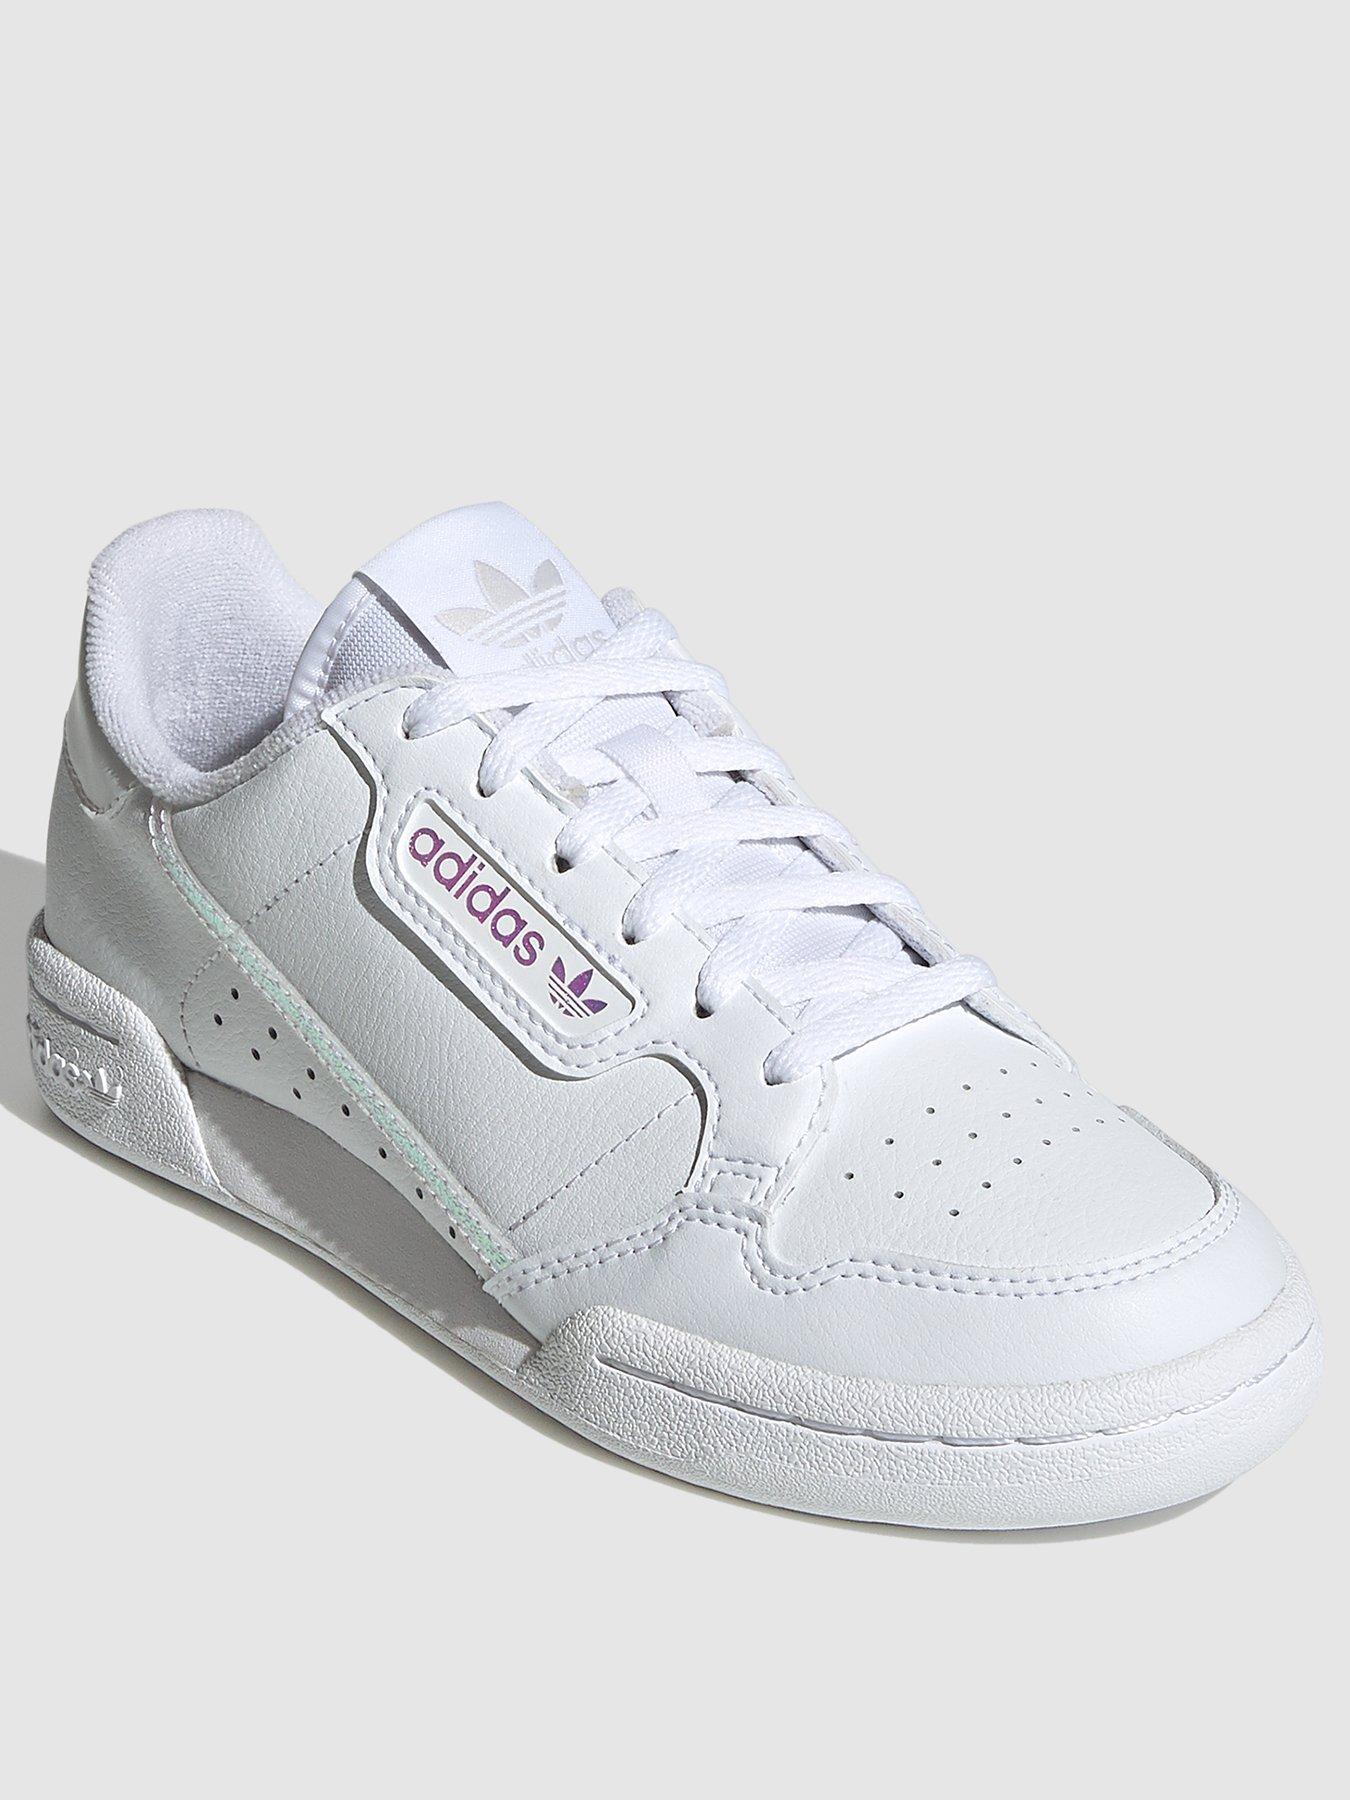 adidas originals white continental 80 trainers